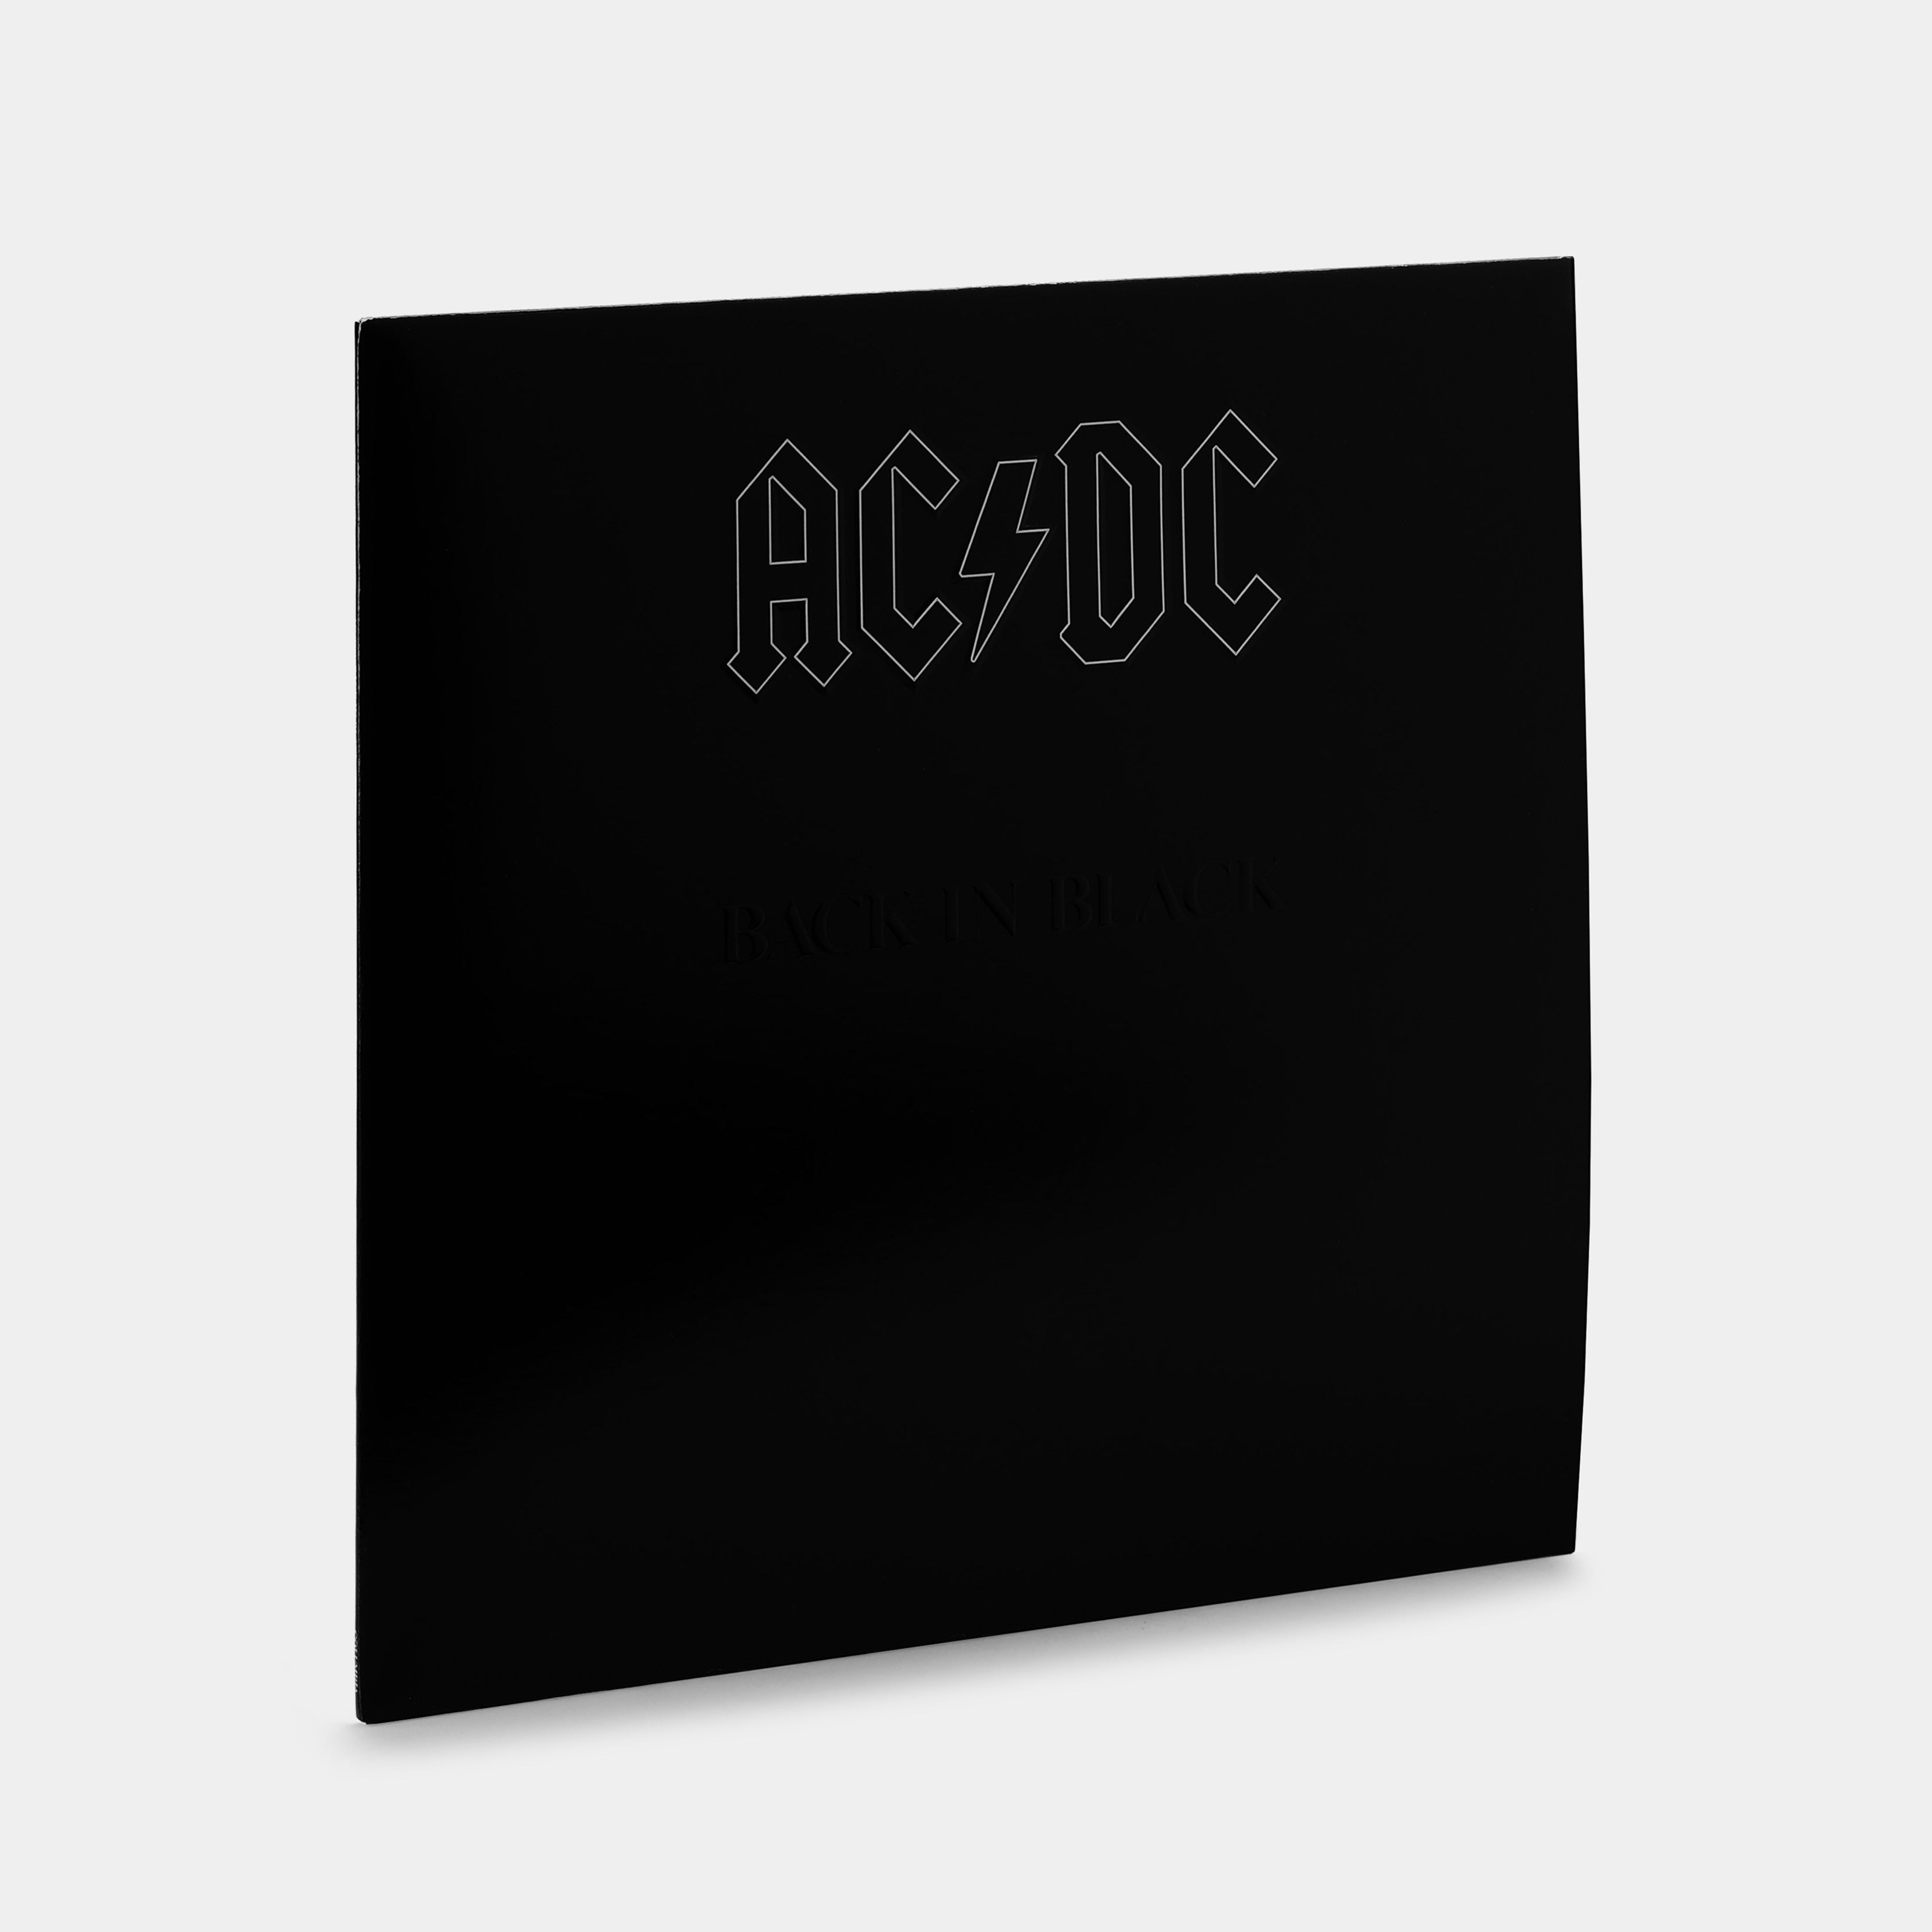 AC/DC - Back in Black LP Vinyl Record